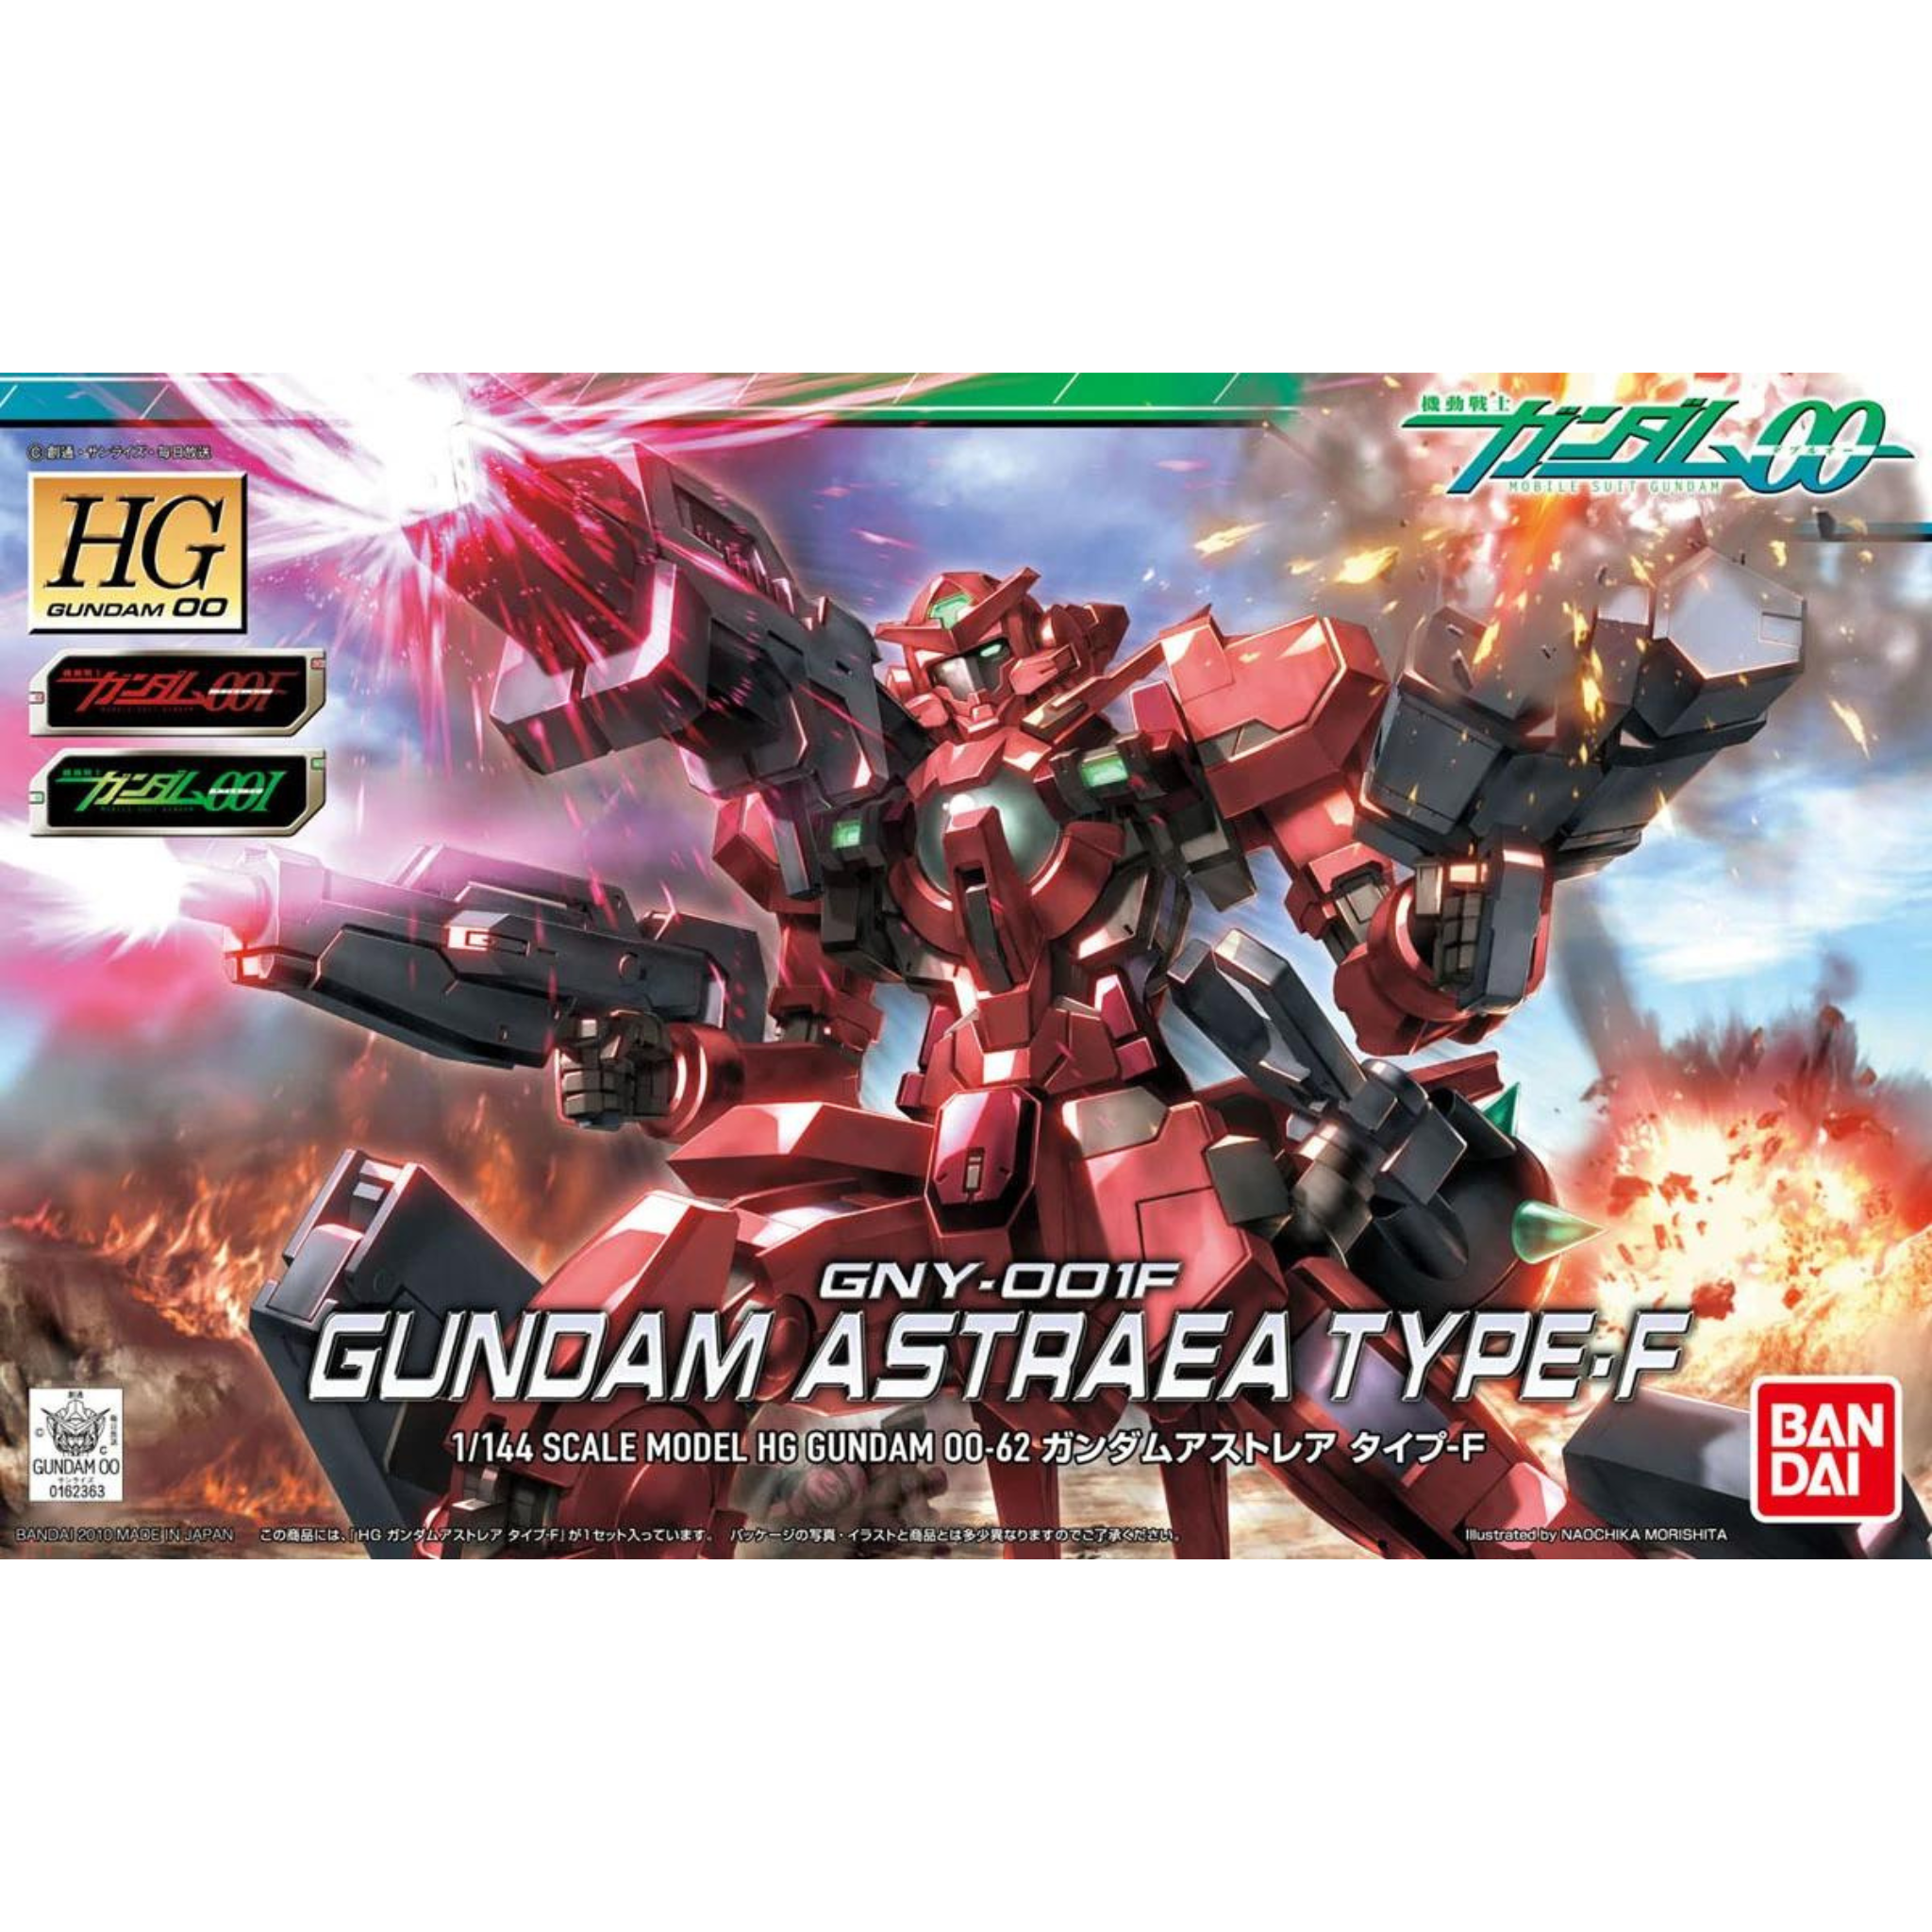 HG 1/144 Gundam 00 #62 GNY-001F Gundam Astraea Type F #0162363 by Bandai